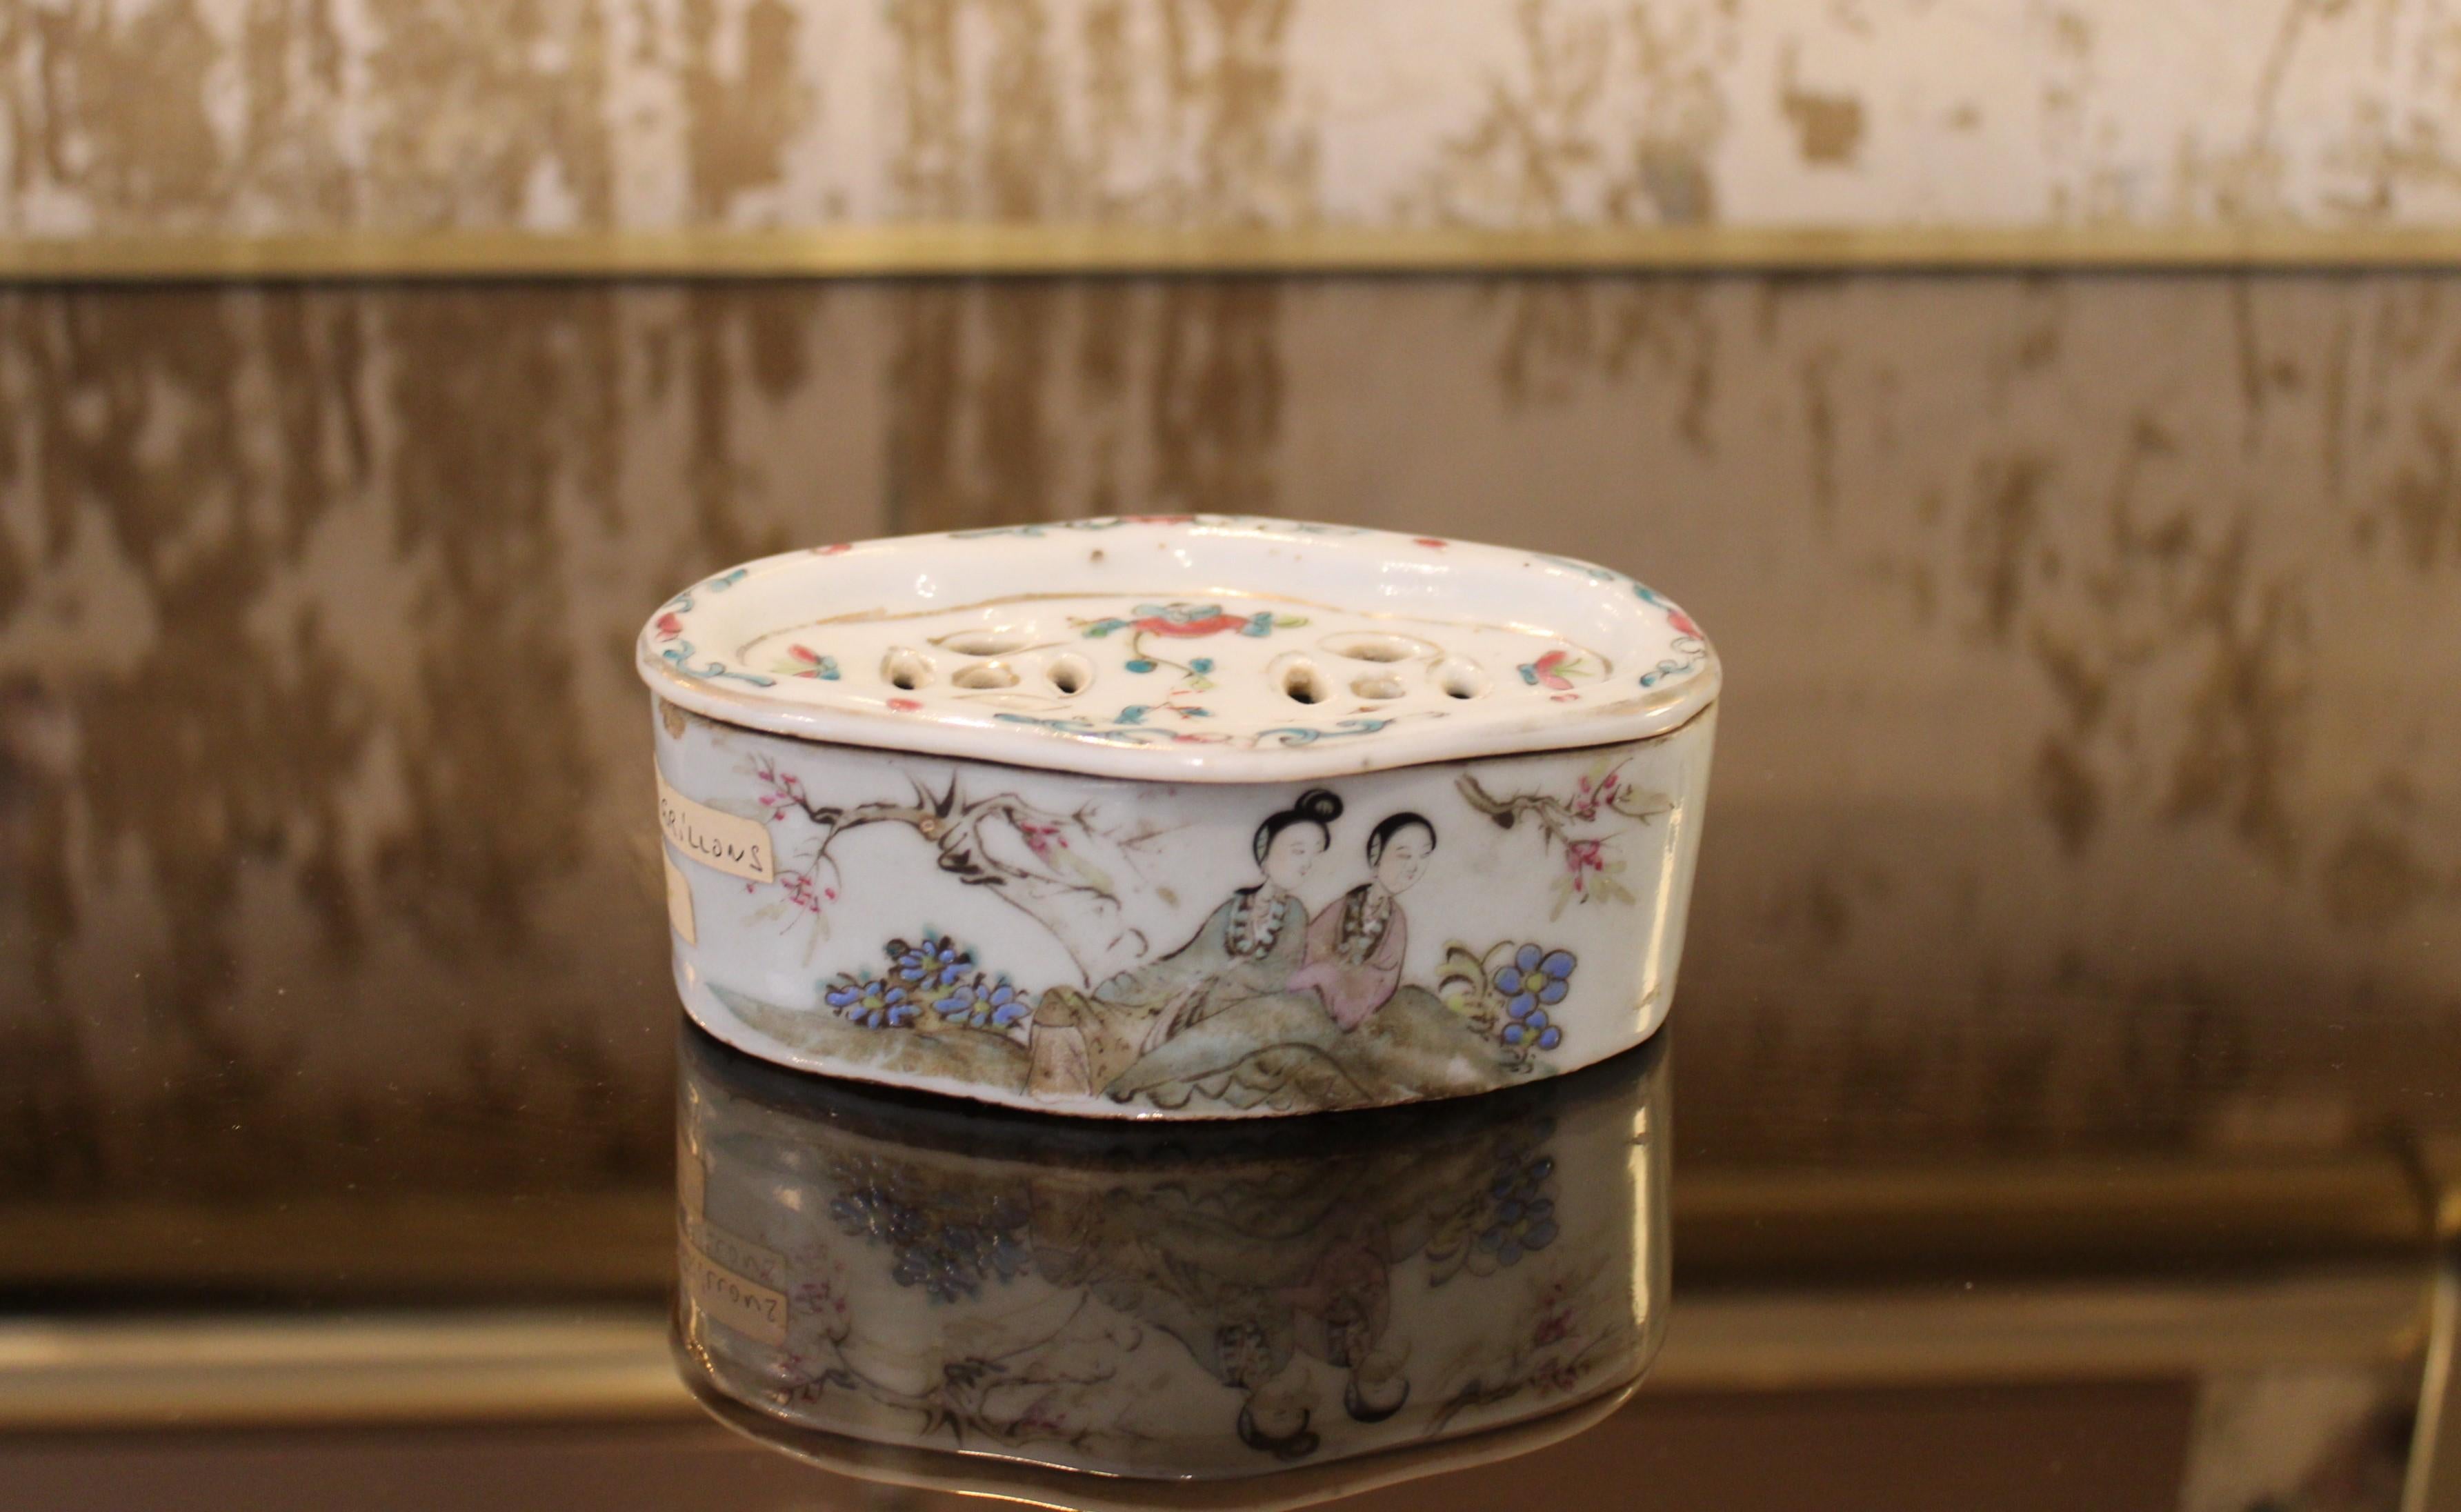 Chinese porcelain cricket box
19th century 